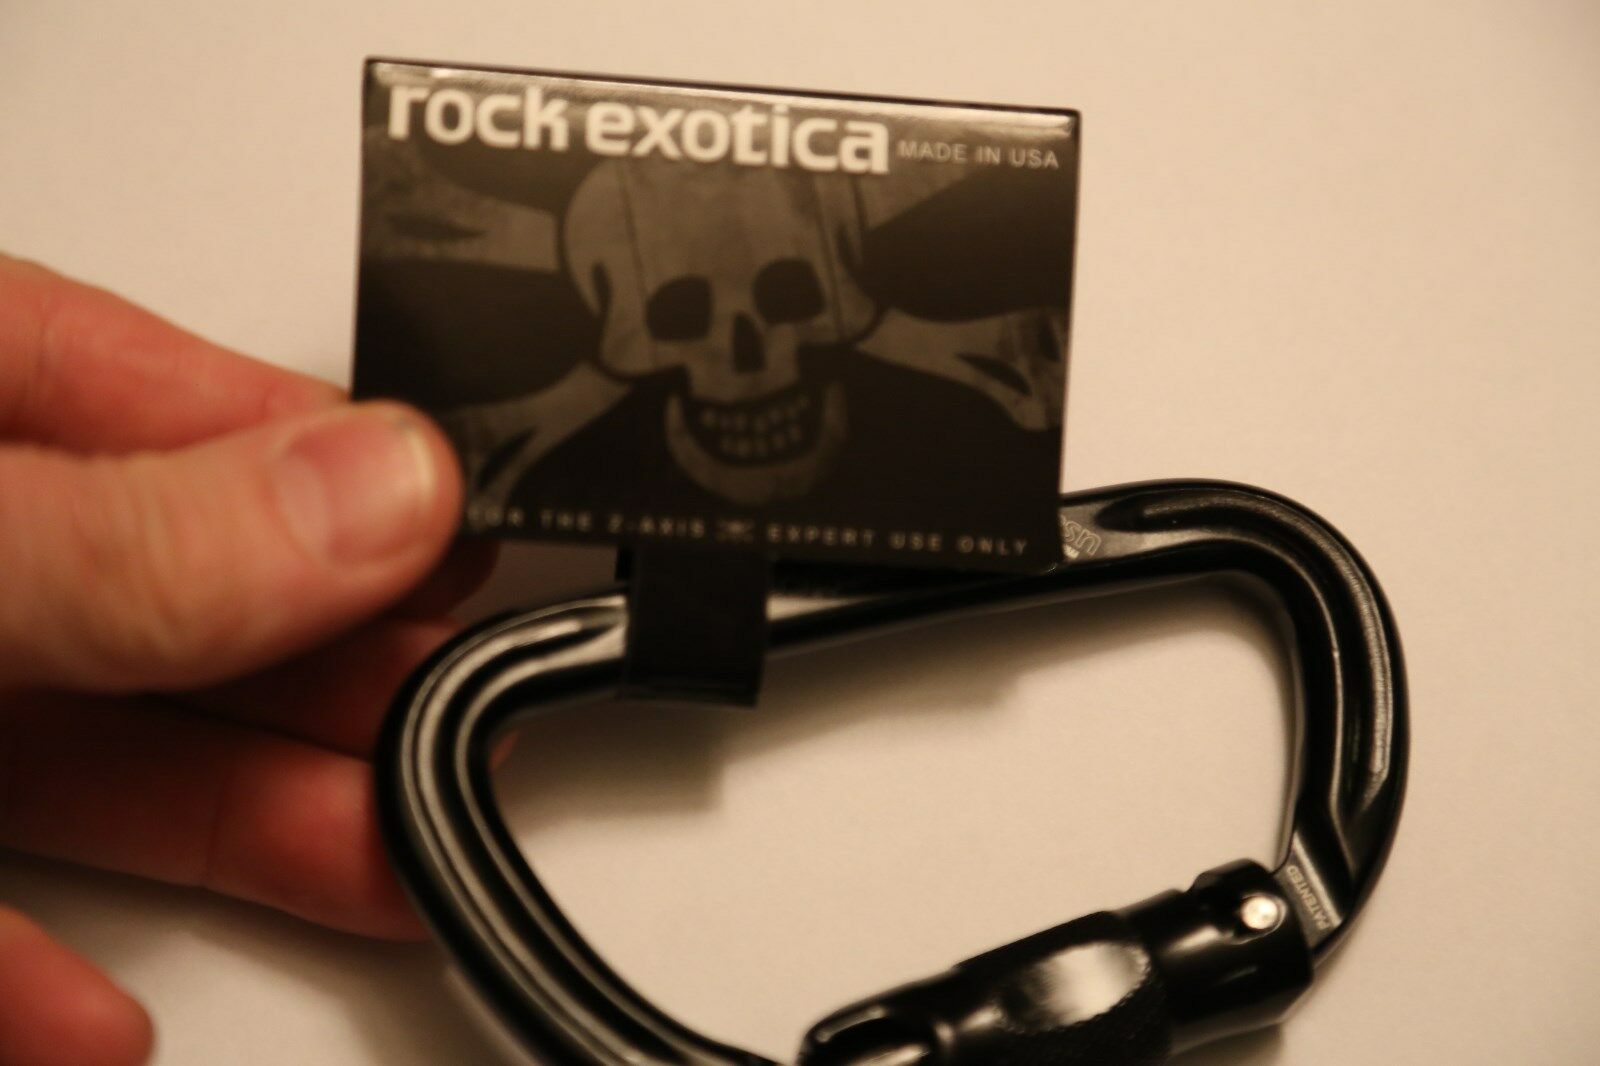 Black Color Carabiner Rock Exotica Best In World Auto-lock Rockd